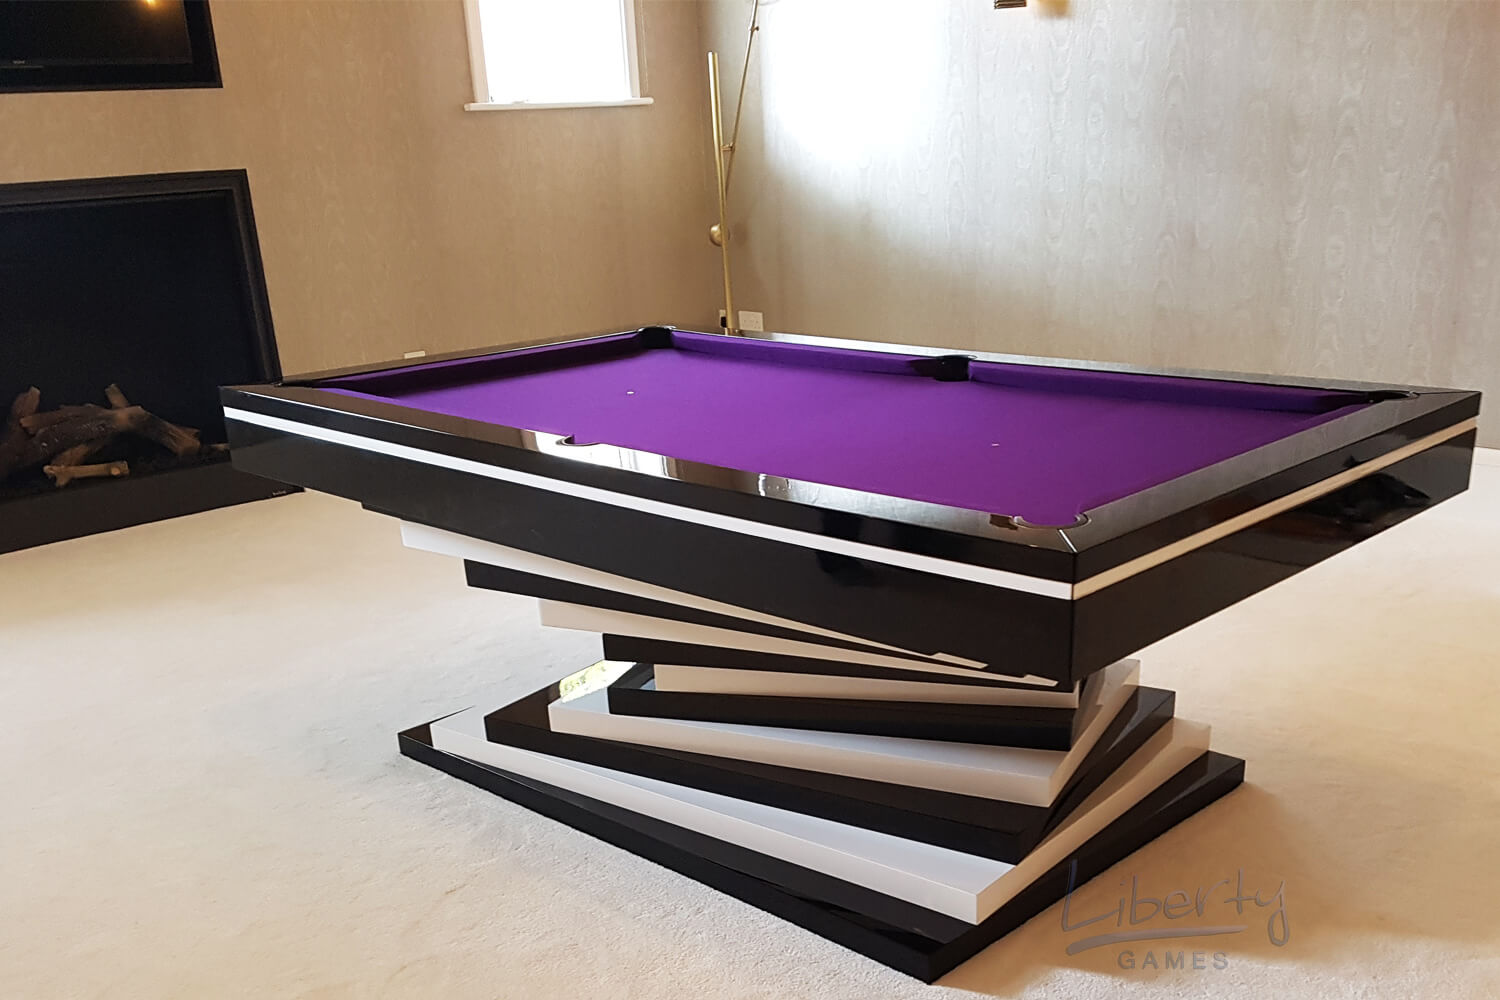 The Harmani Slate Bed Pool Table | Liberty Games